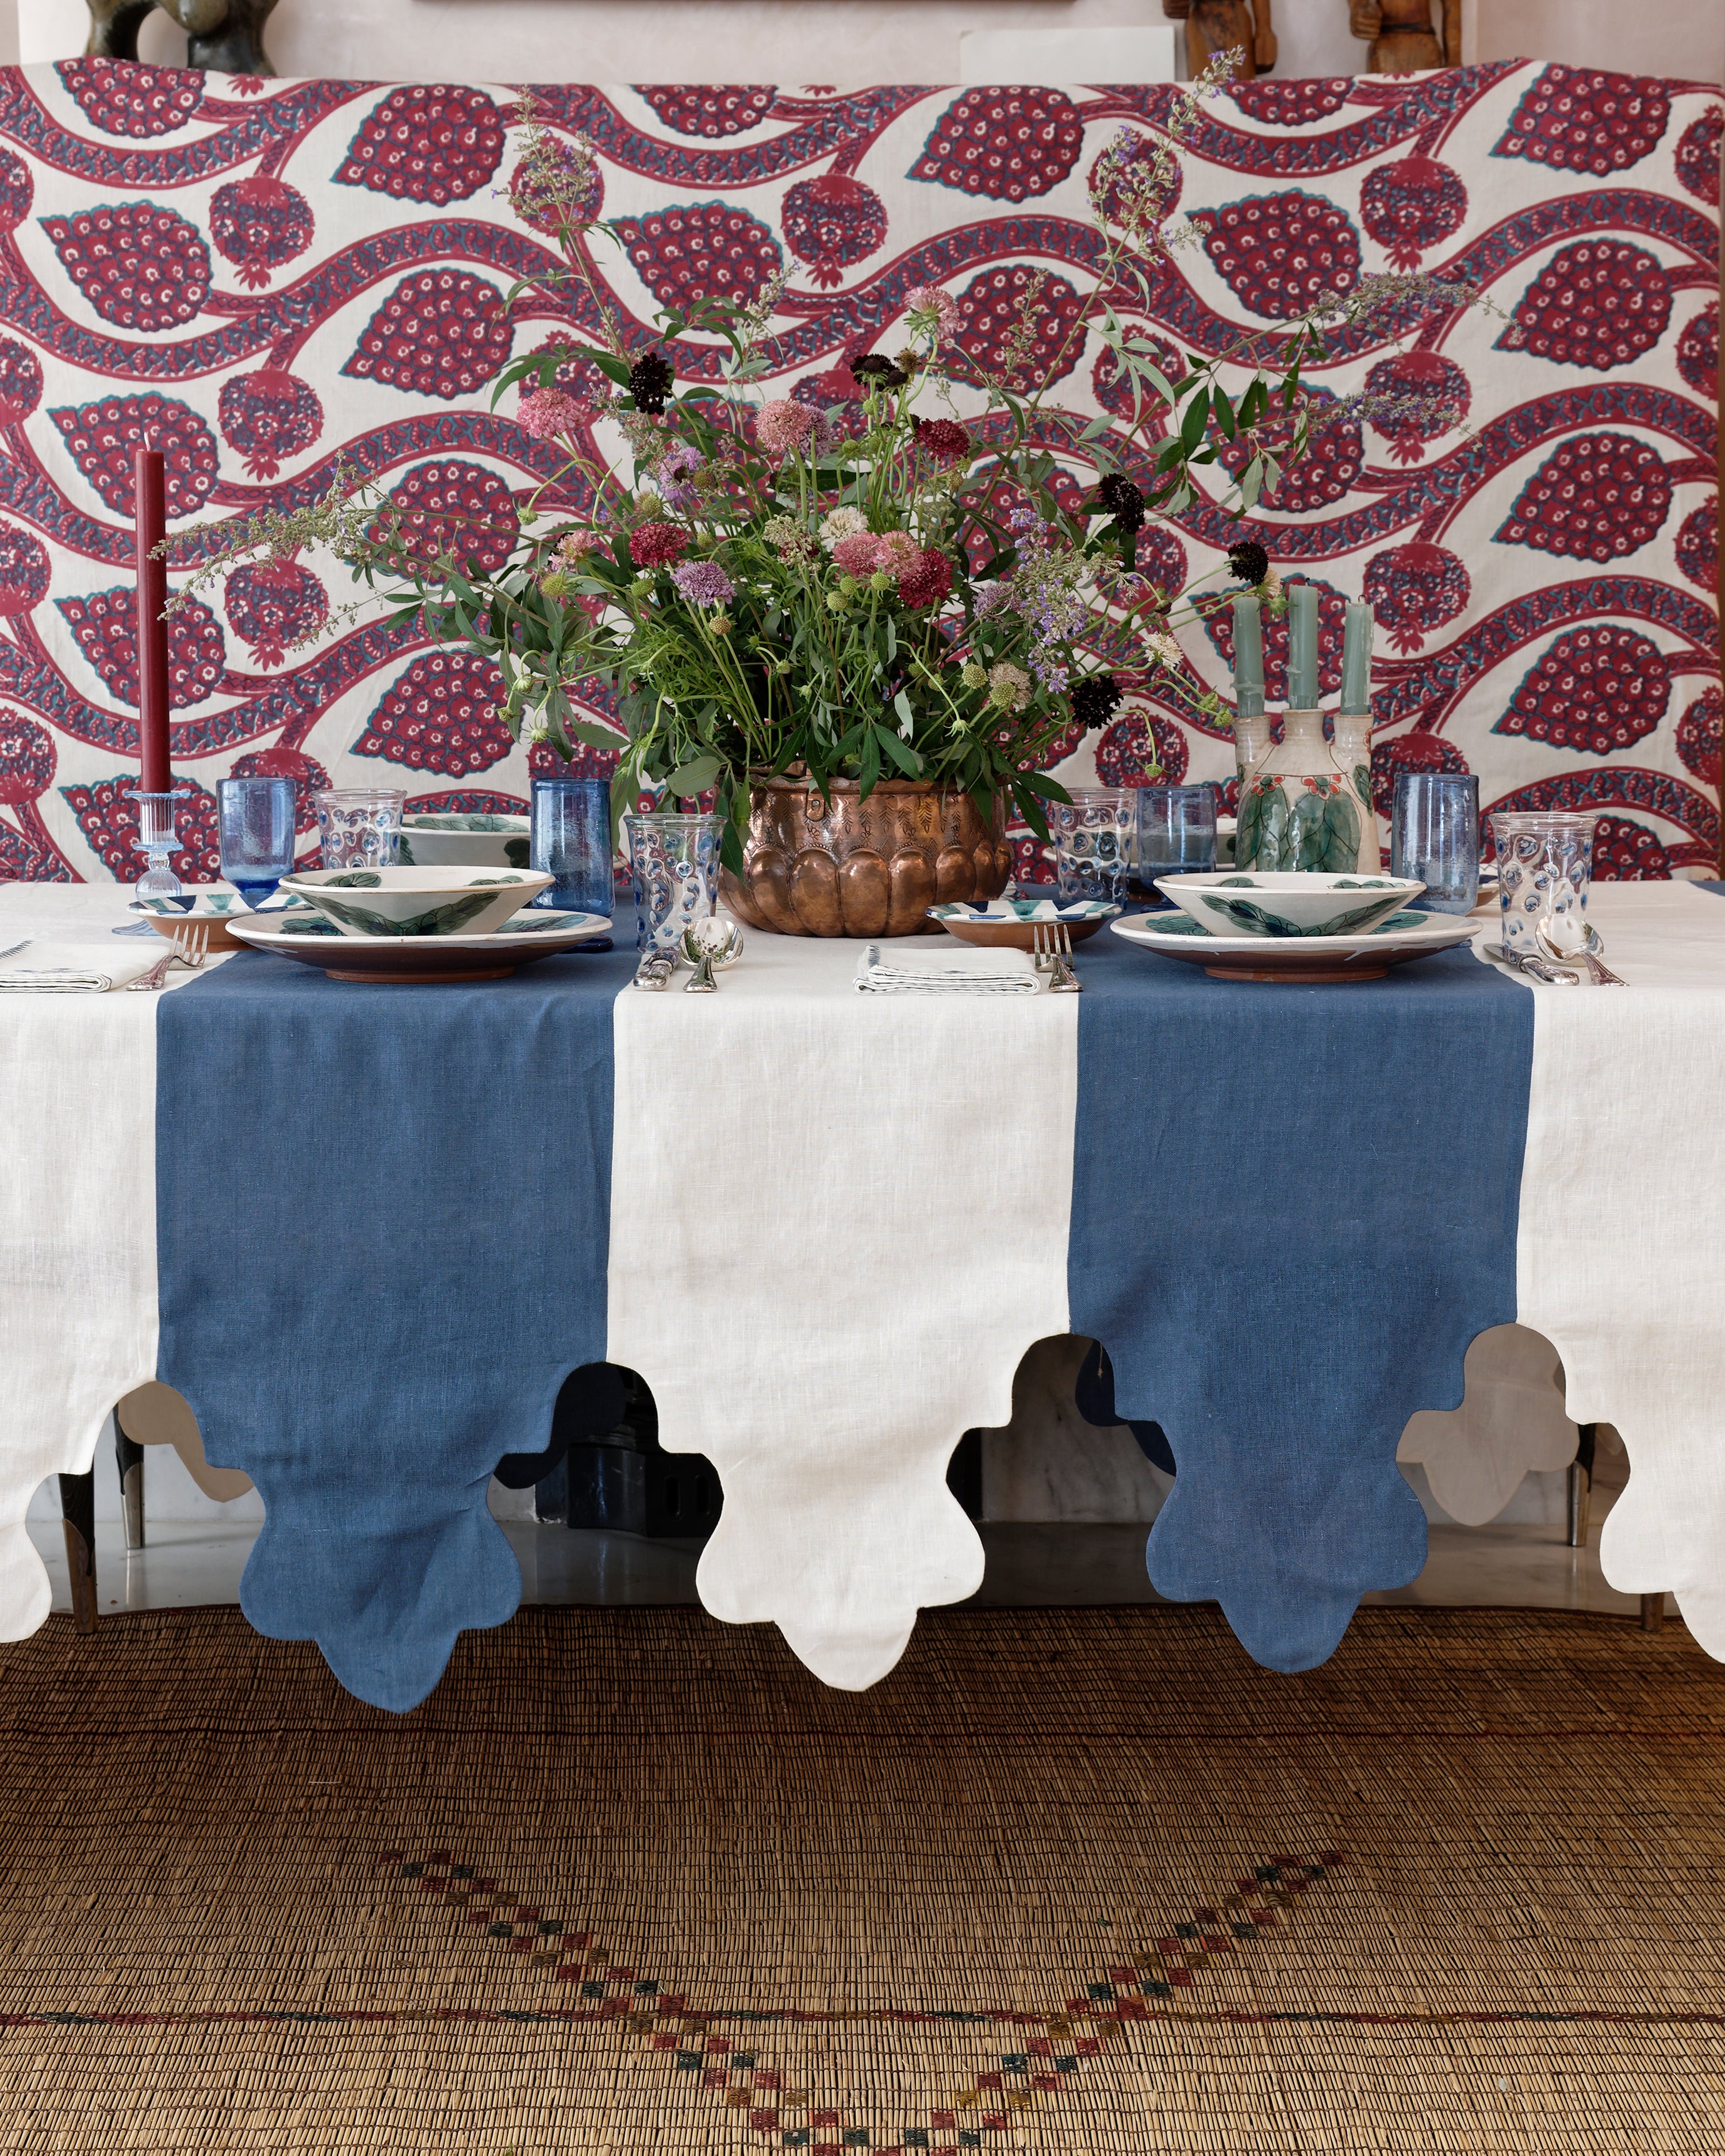 Sultana Tablecloth Blue